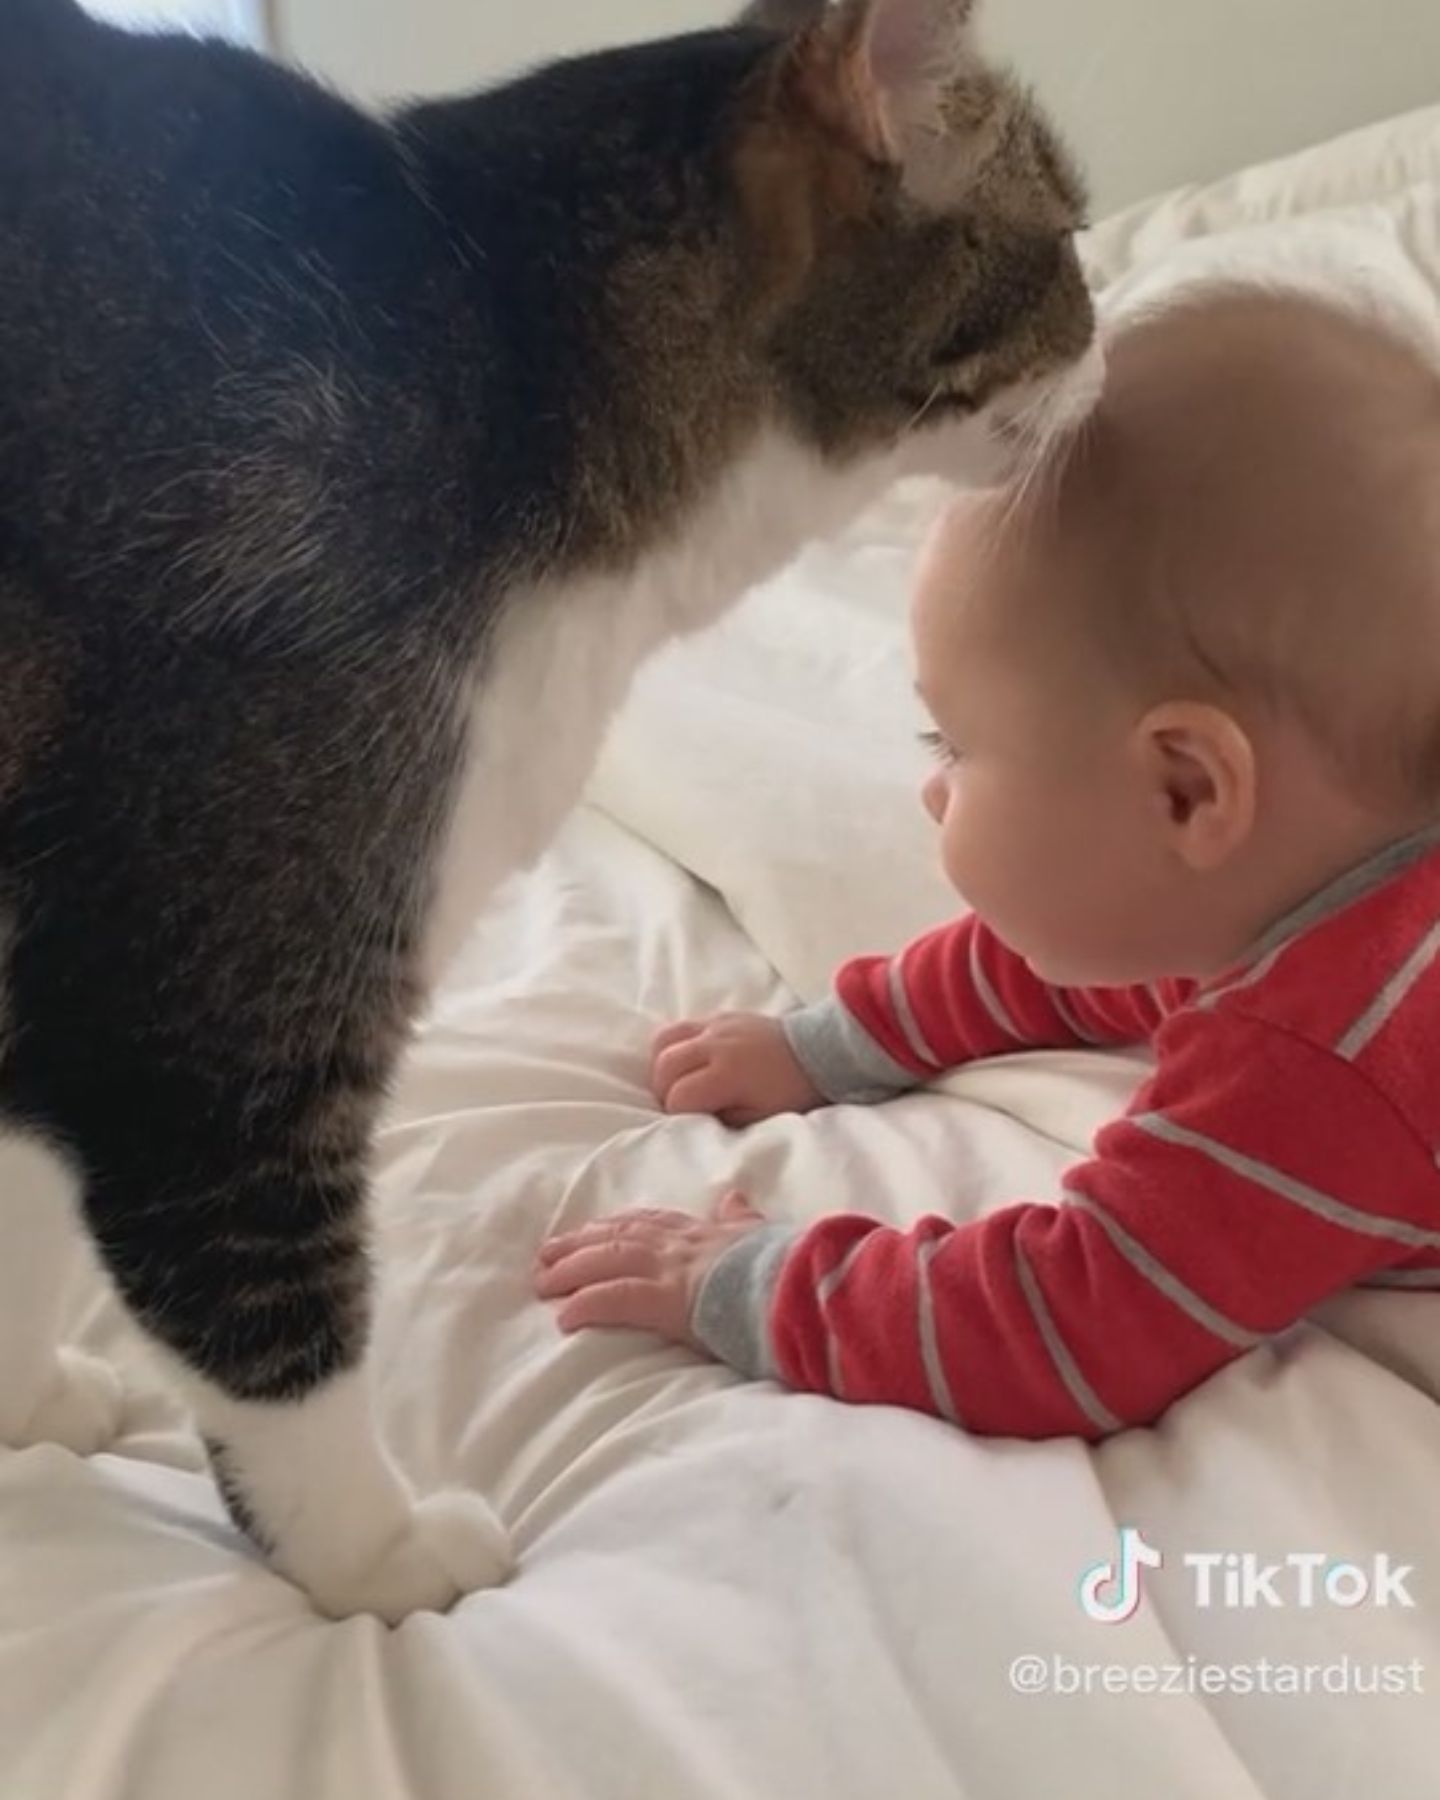 cat licking baby